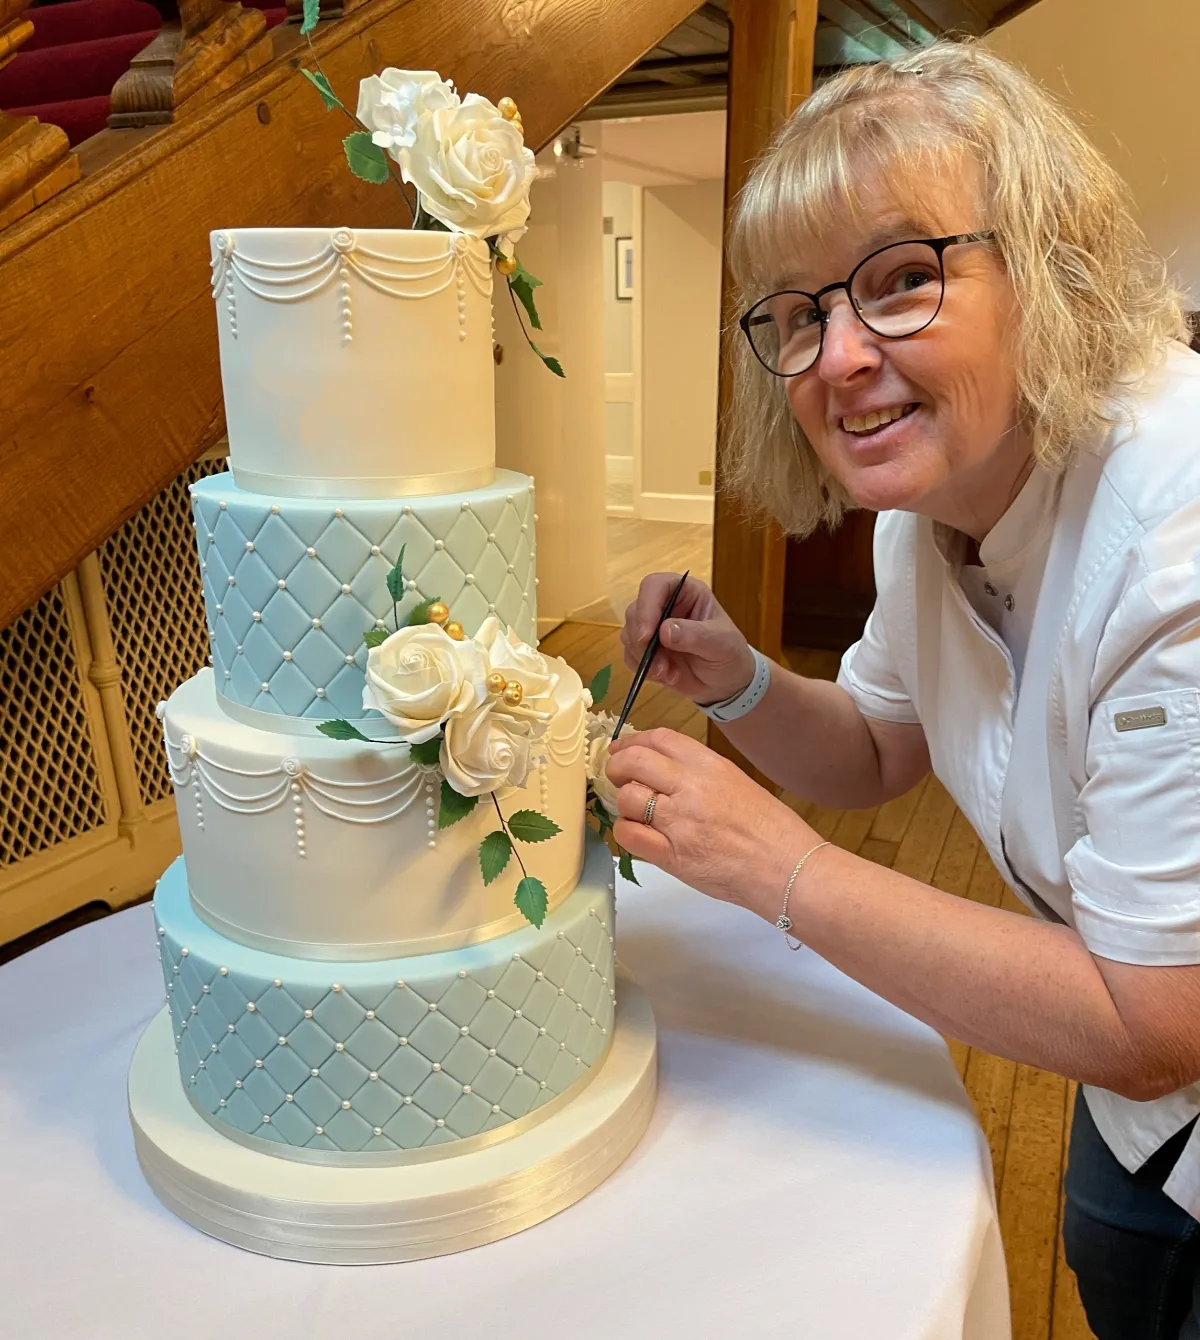 carol smith award winning caker designer - the wedding lounge